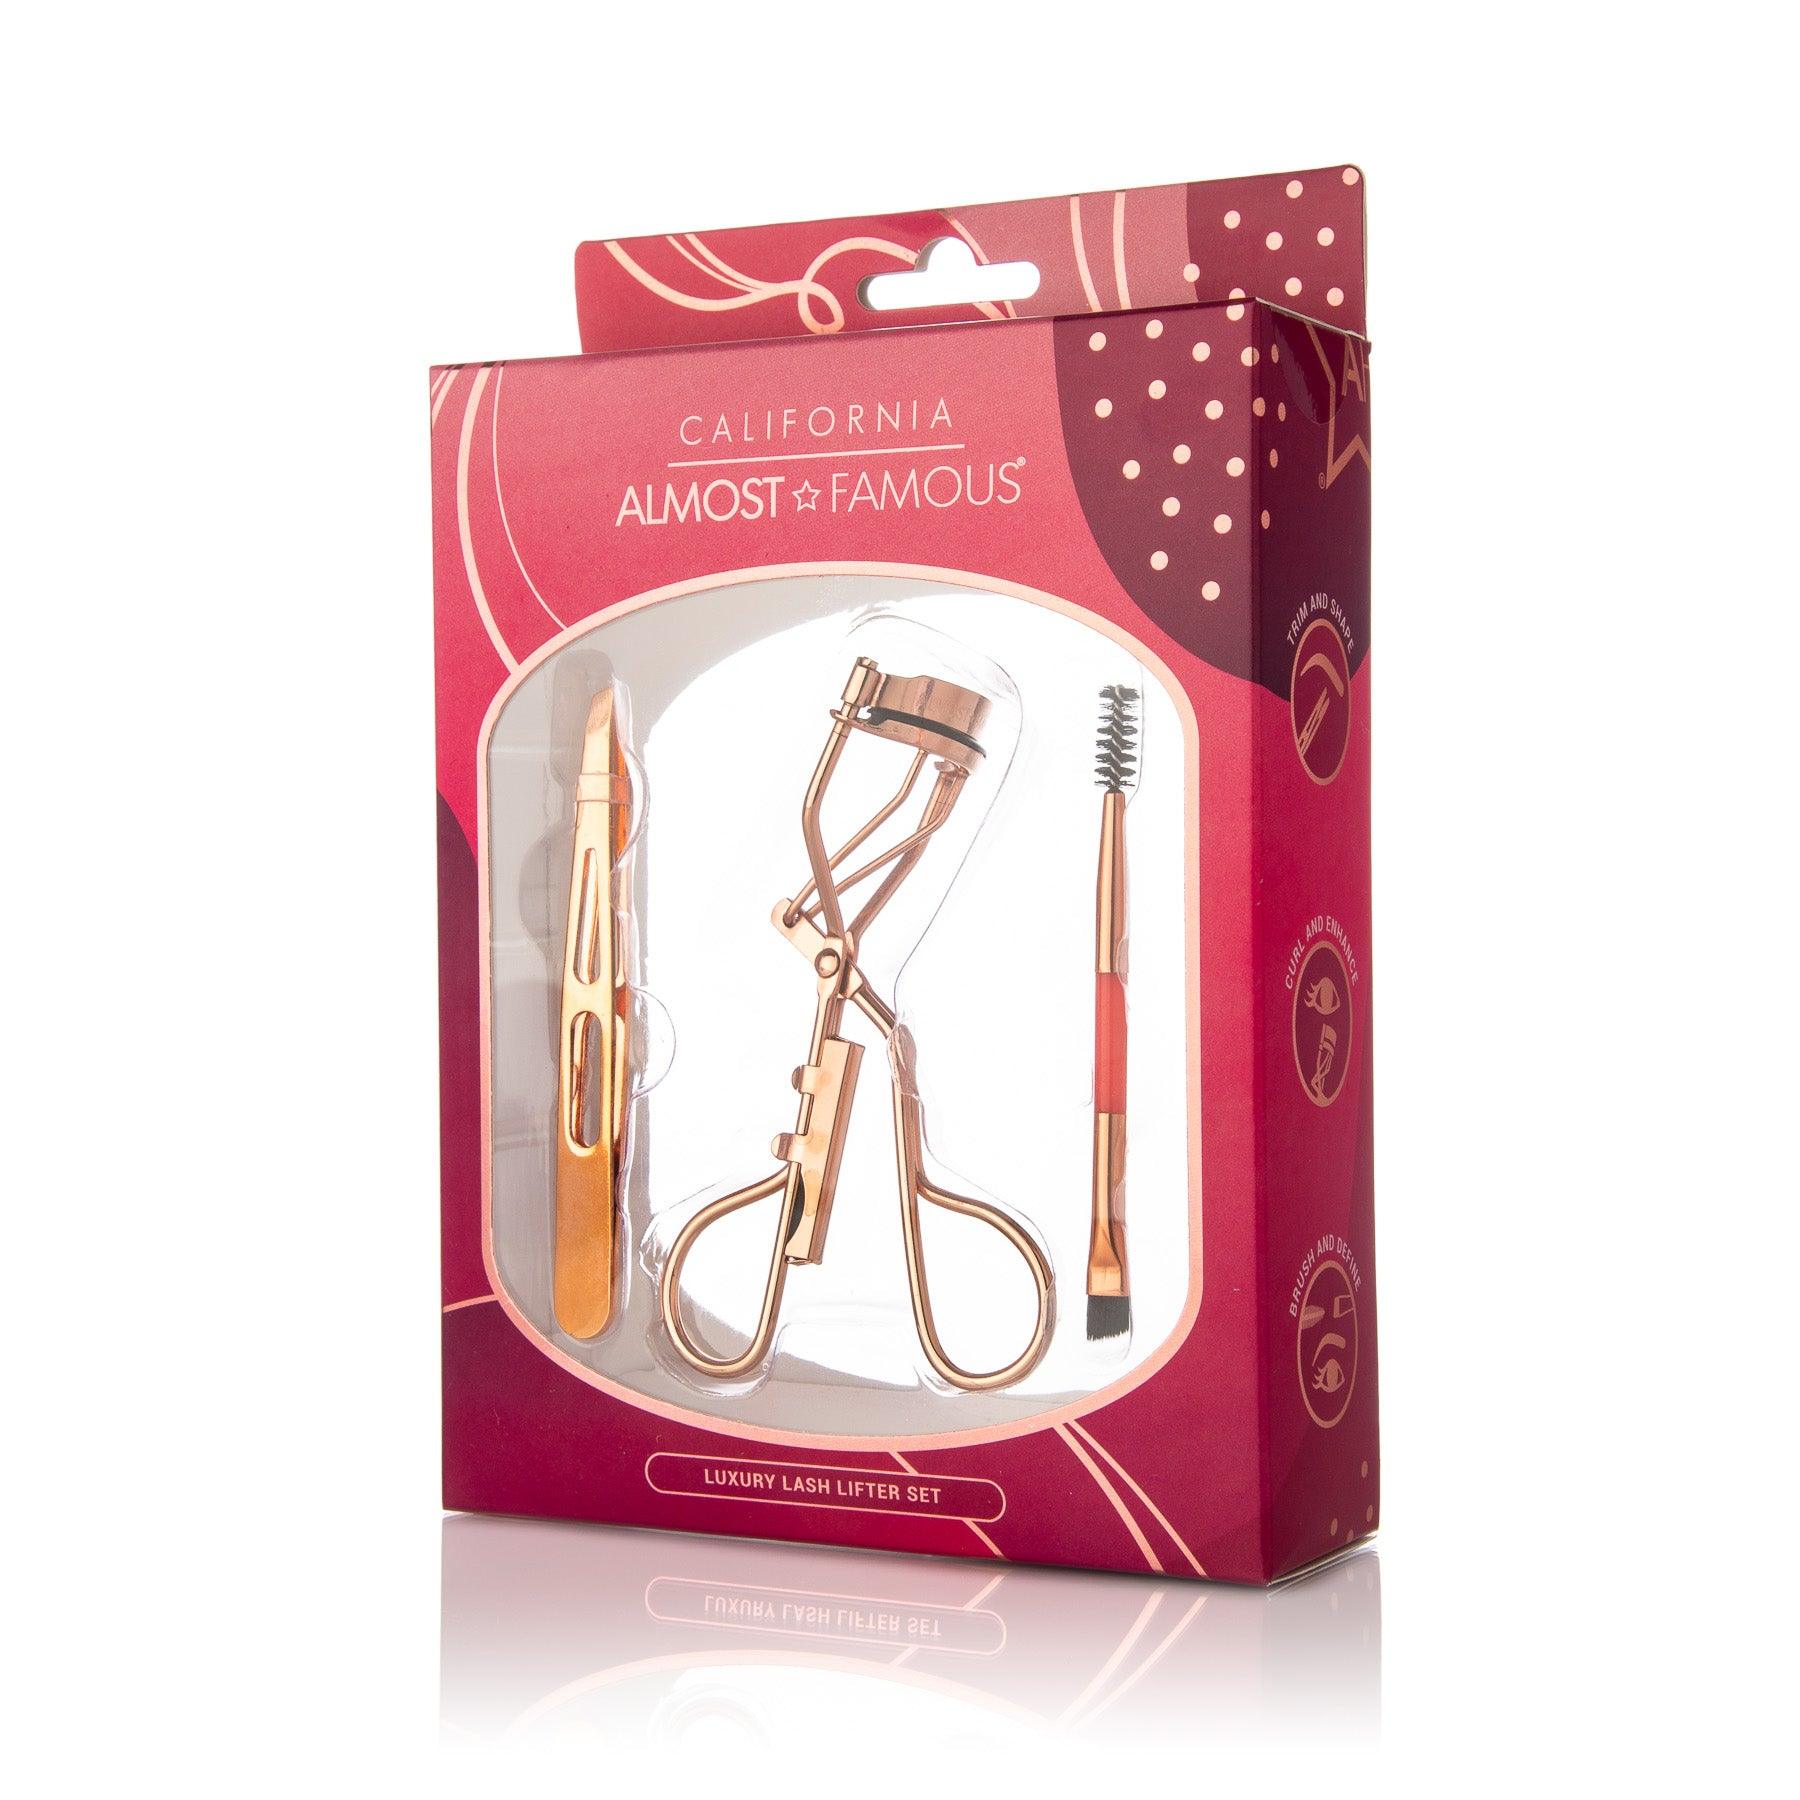 Almost famous Lash Lifter Premium Eye Care Kit - Rose Gold - BelleHarris